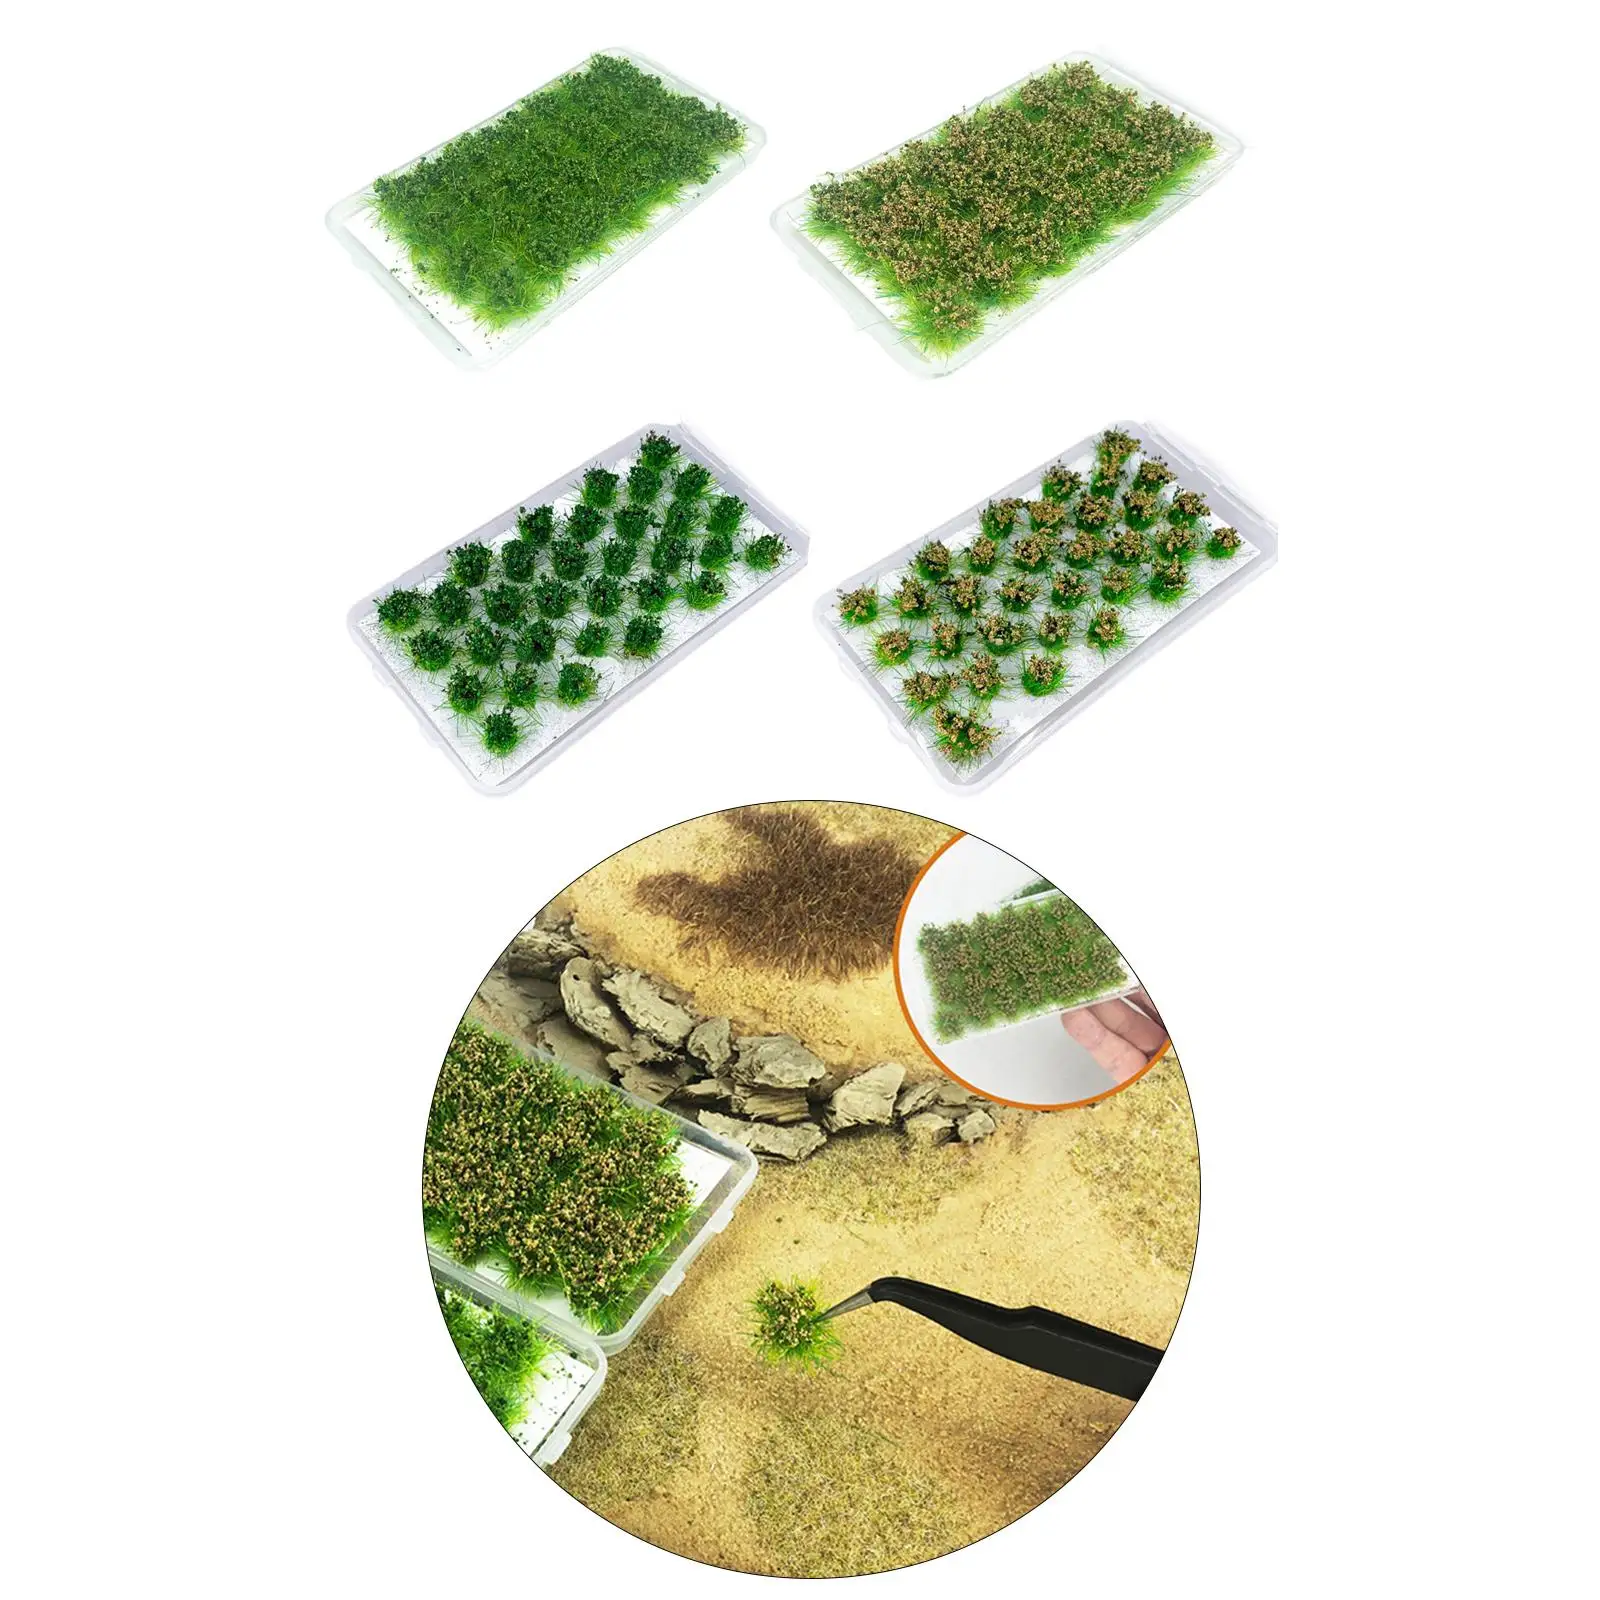 Bushy Miniature Grass Tufts Miniature Static Scenery Model Dioramas Gaming Terrain Modeling Artificial Grass Cluster Grass Tufts